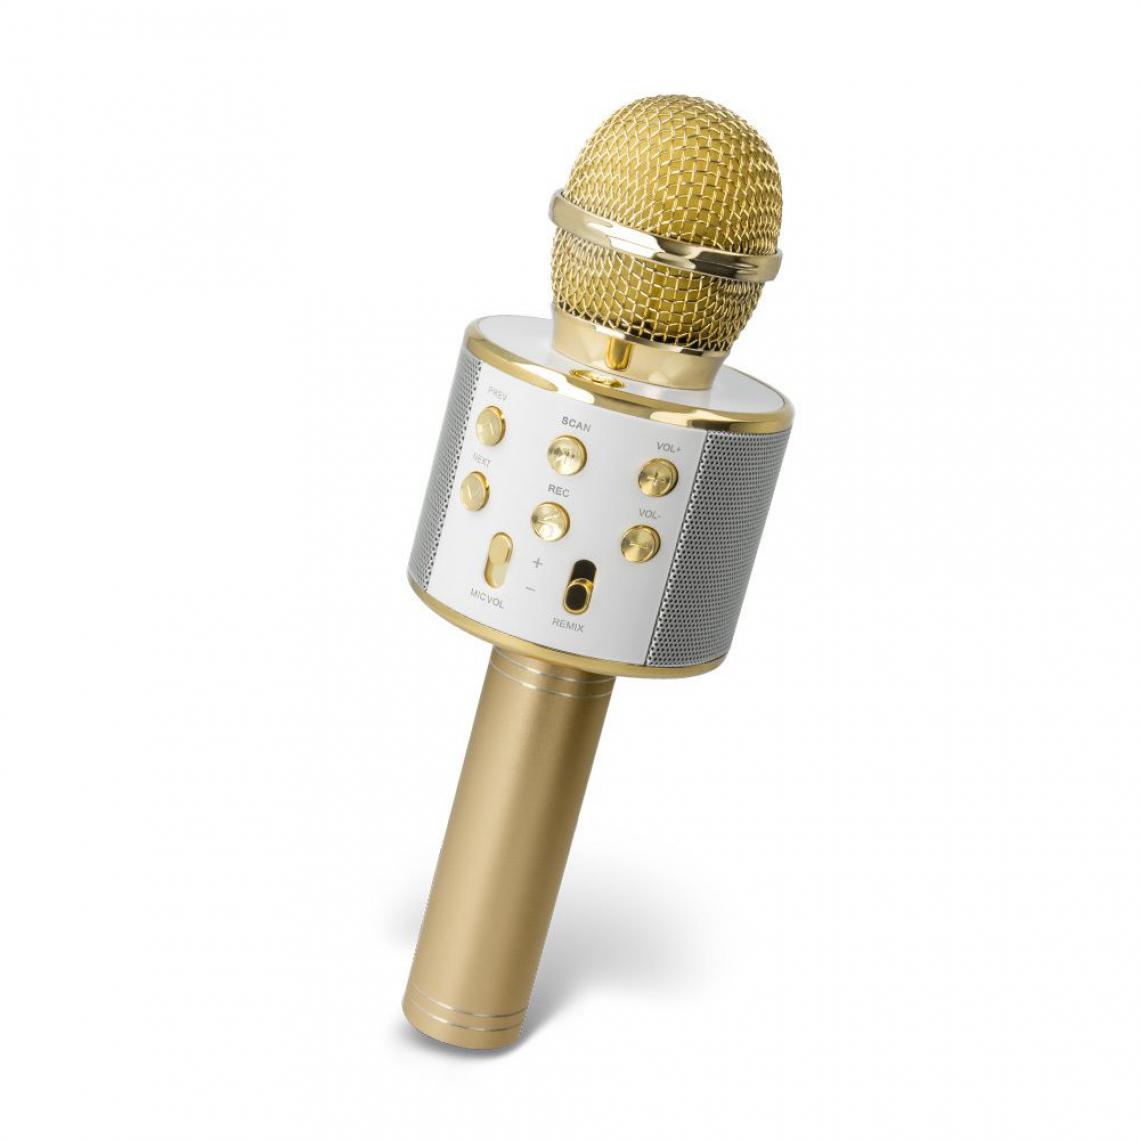 Ozzzo - Microphone Karaoke bluetooth haut parleur ozzzo Gold Or pour HUAWEI P10 Plus - Autres accessoires smartphone